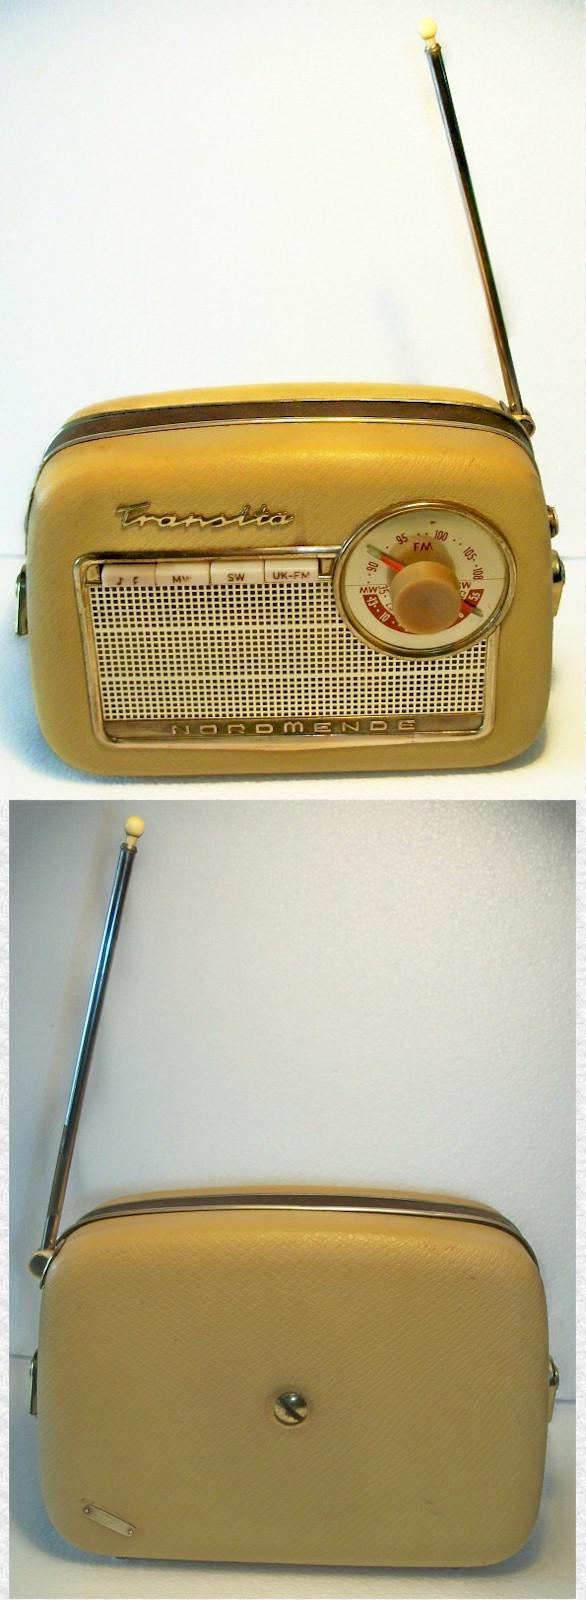 Nordmende Transita AM/FM Portable (1960)